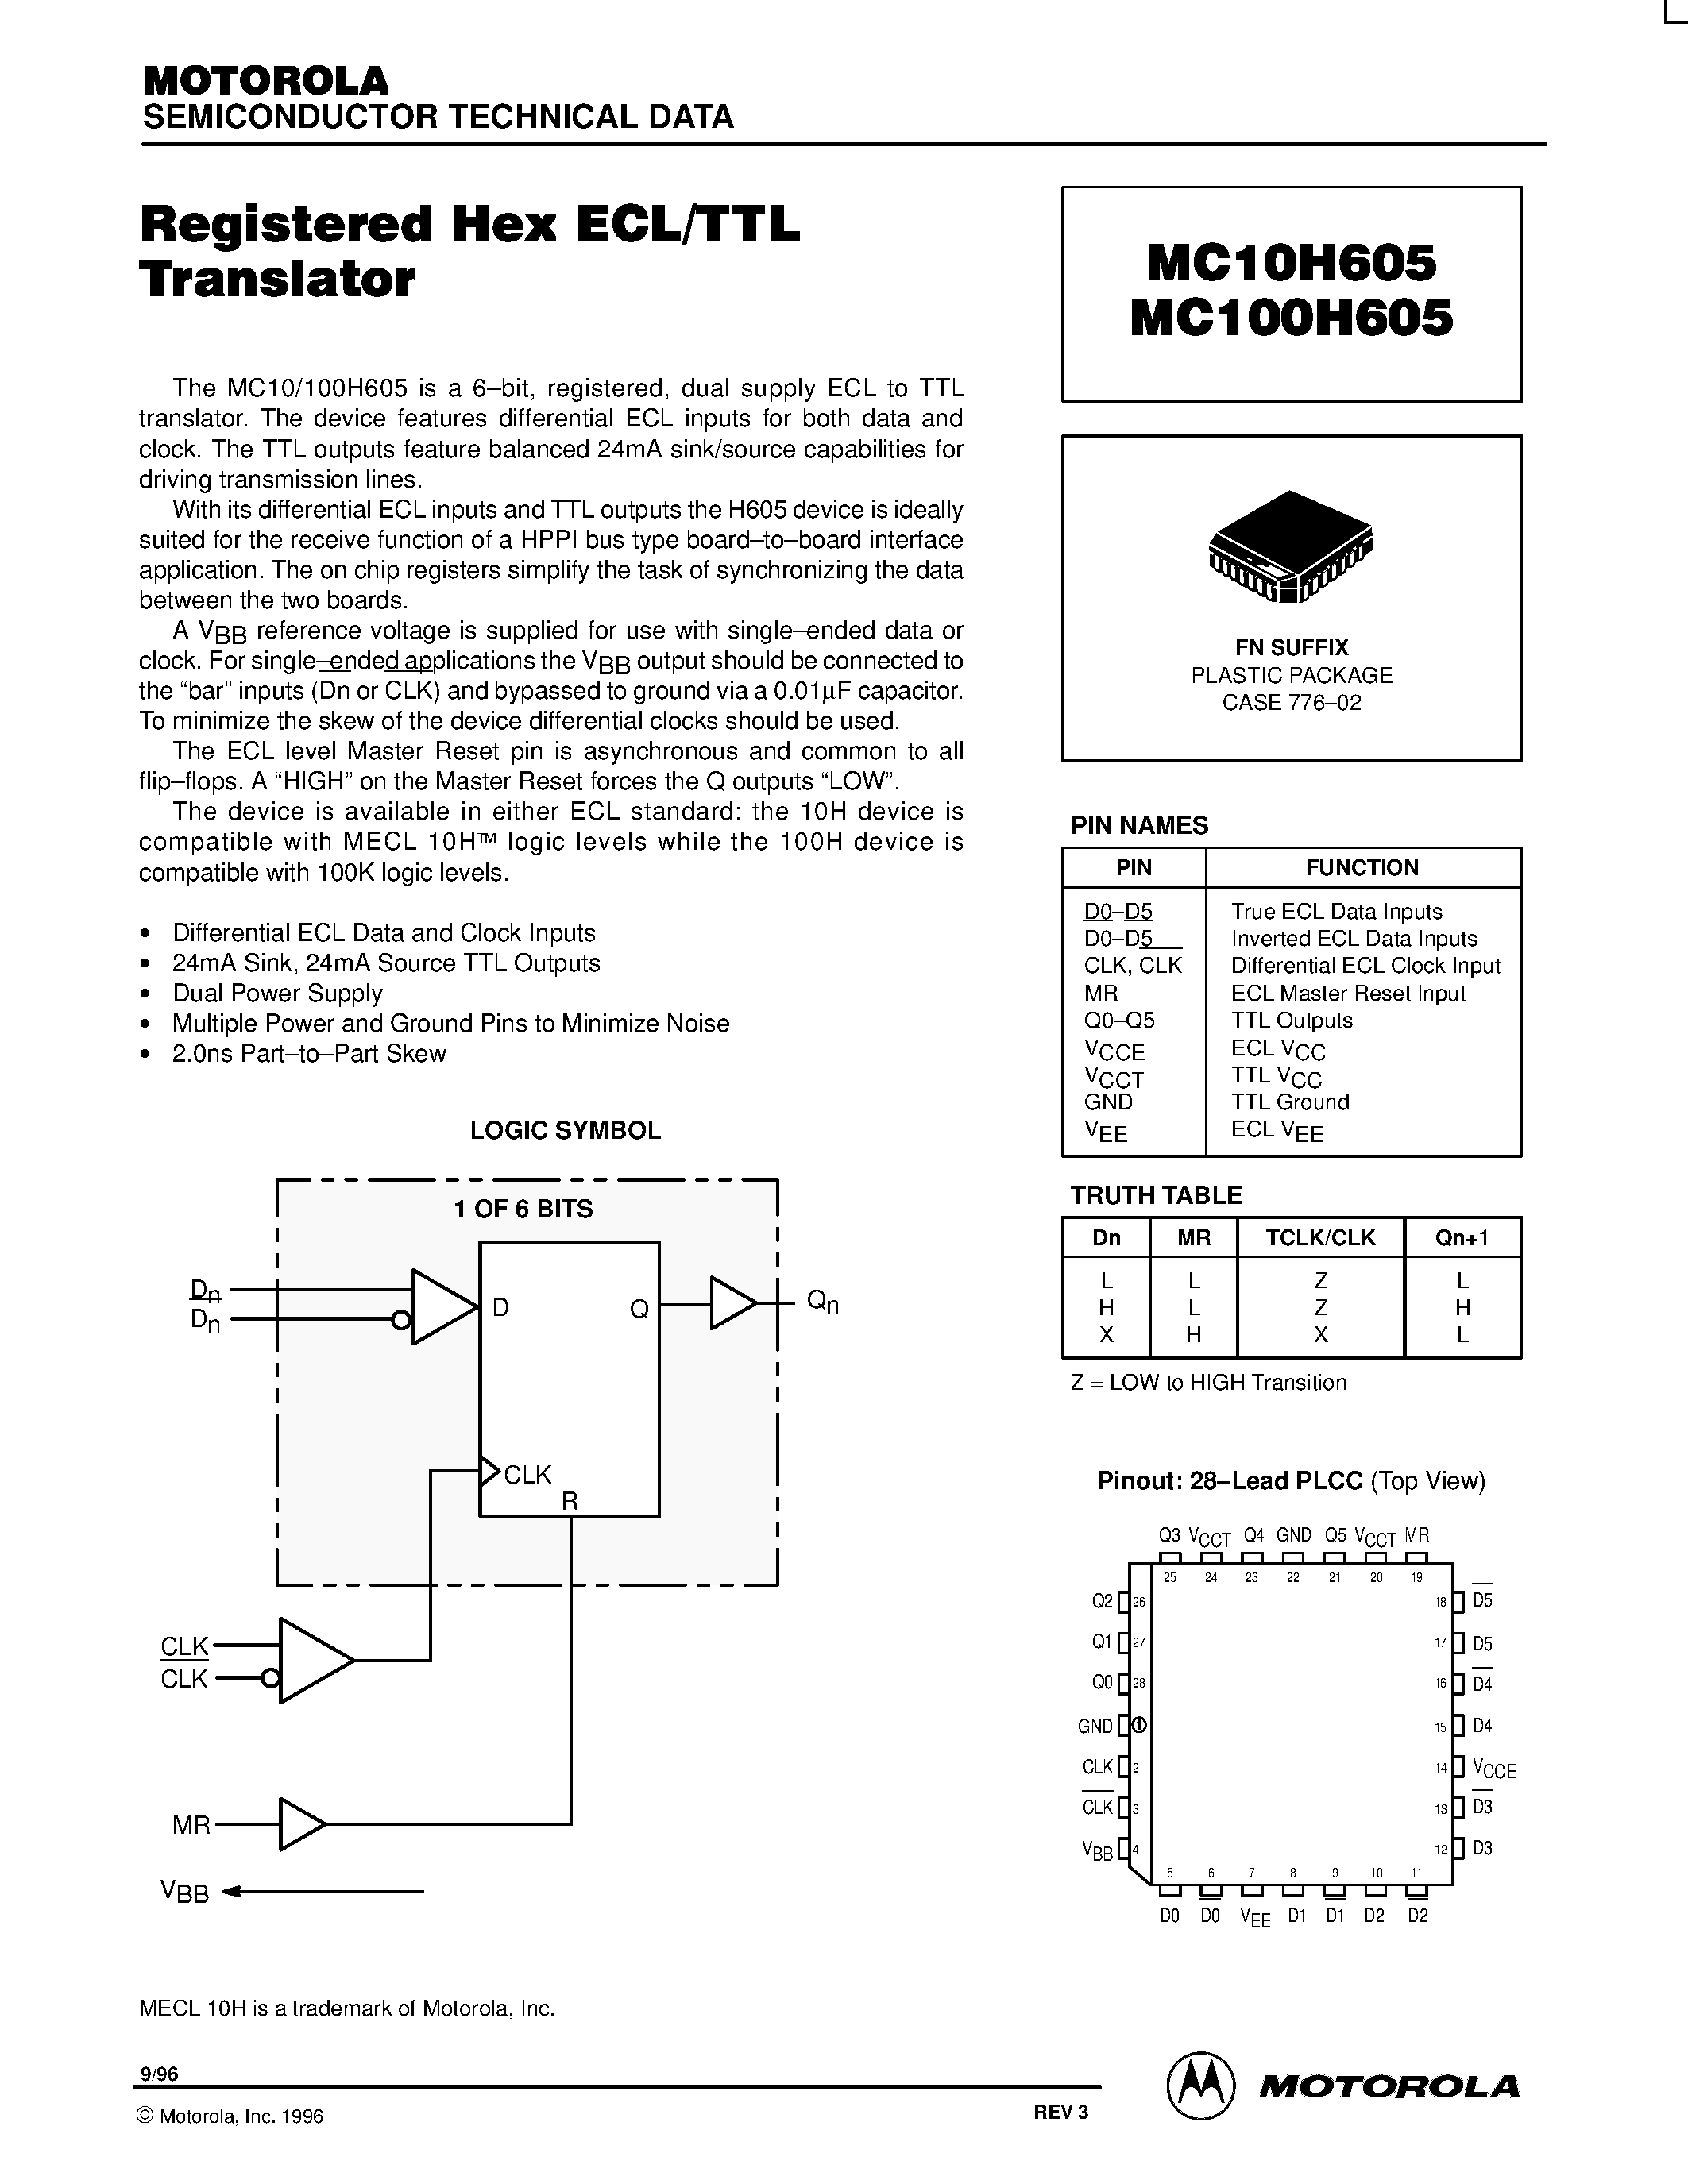 Datasheet MC10H605FN - Registered Hex ECL/TTL Translator page 1